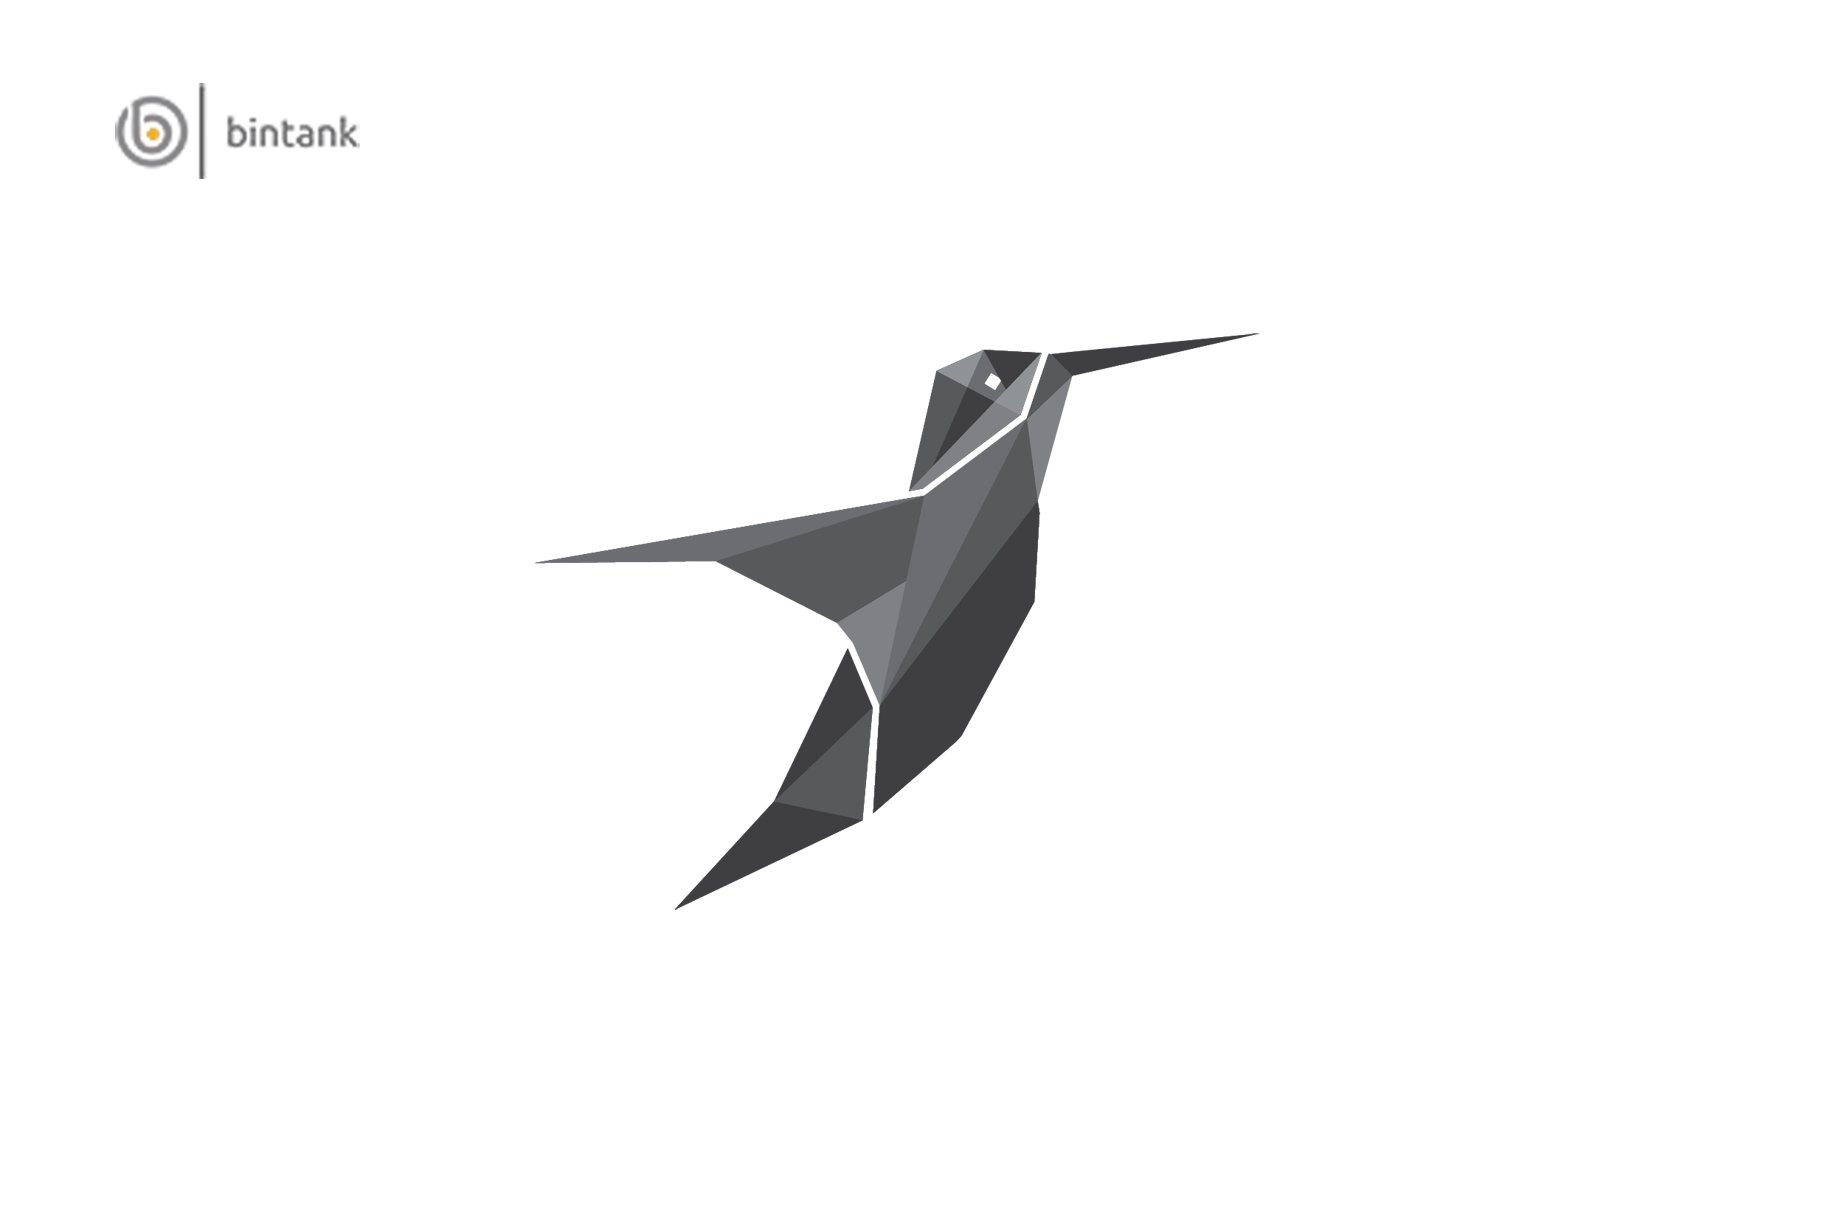 Polygon Humming Bird Logo cover image.